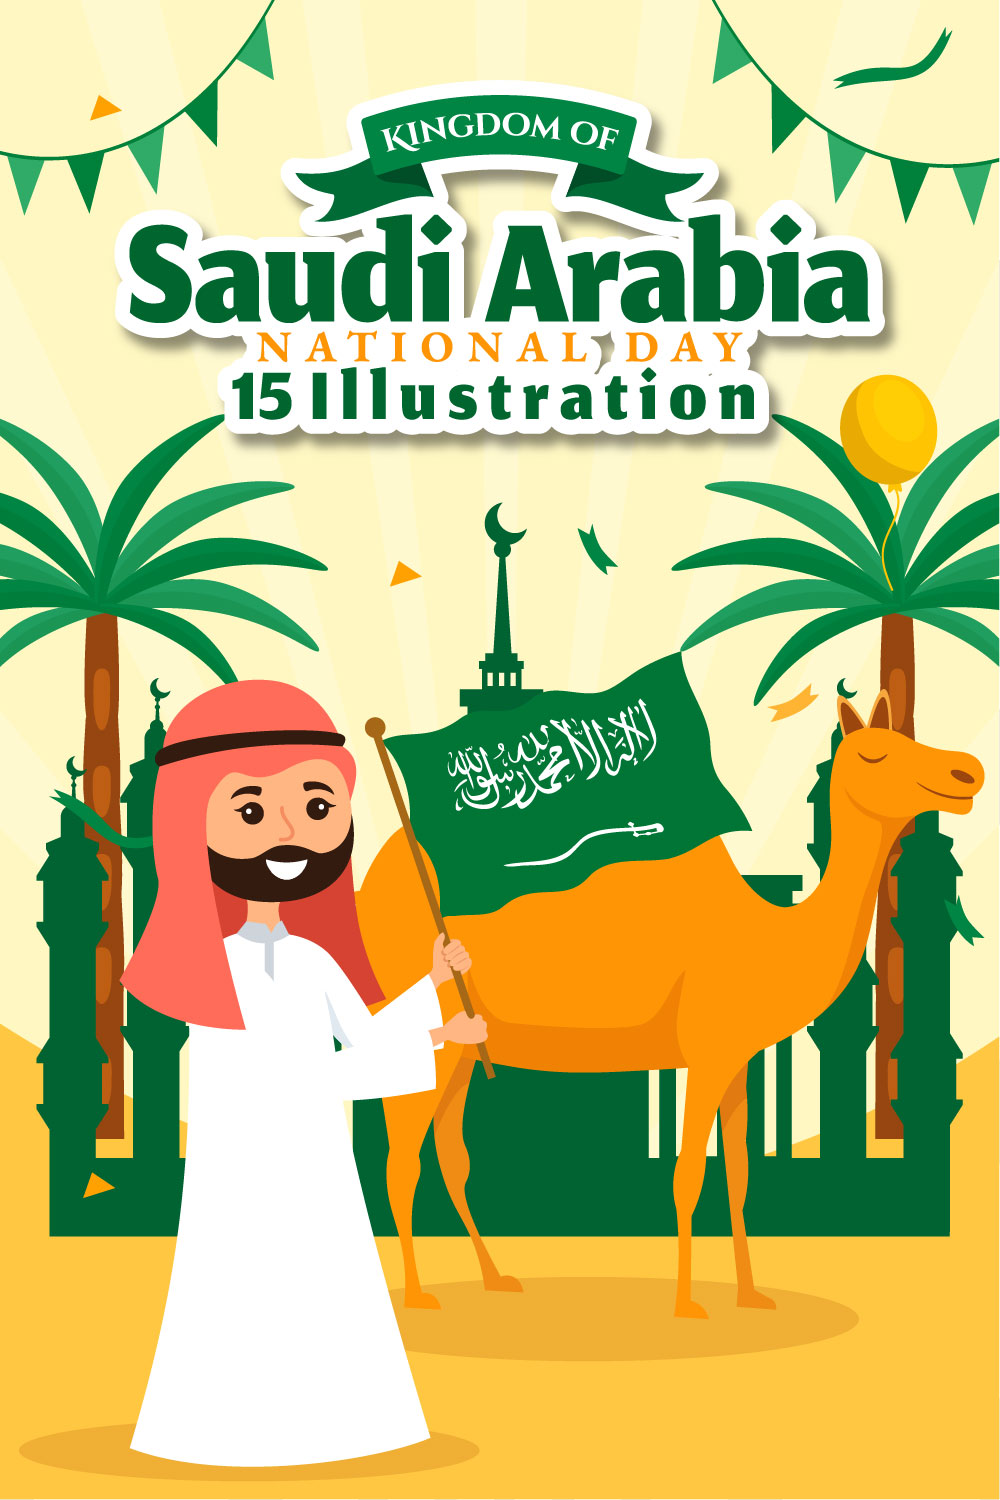 17 Saudi Arabia National Day Illustration pinterest preview image.